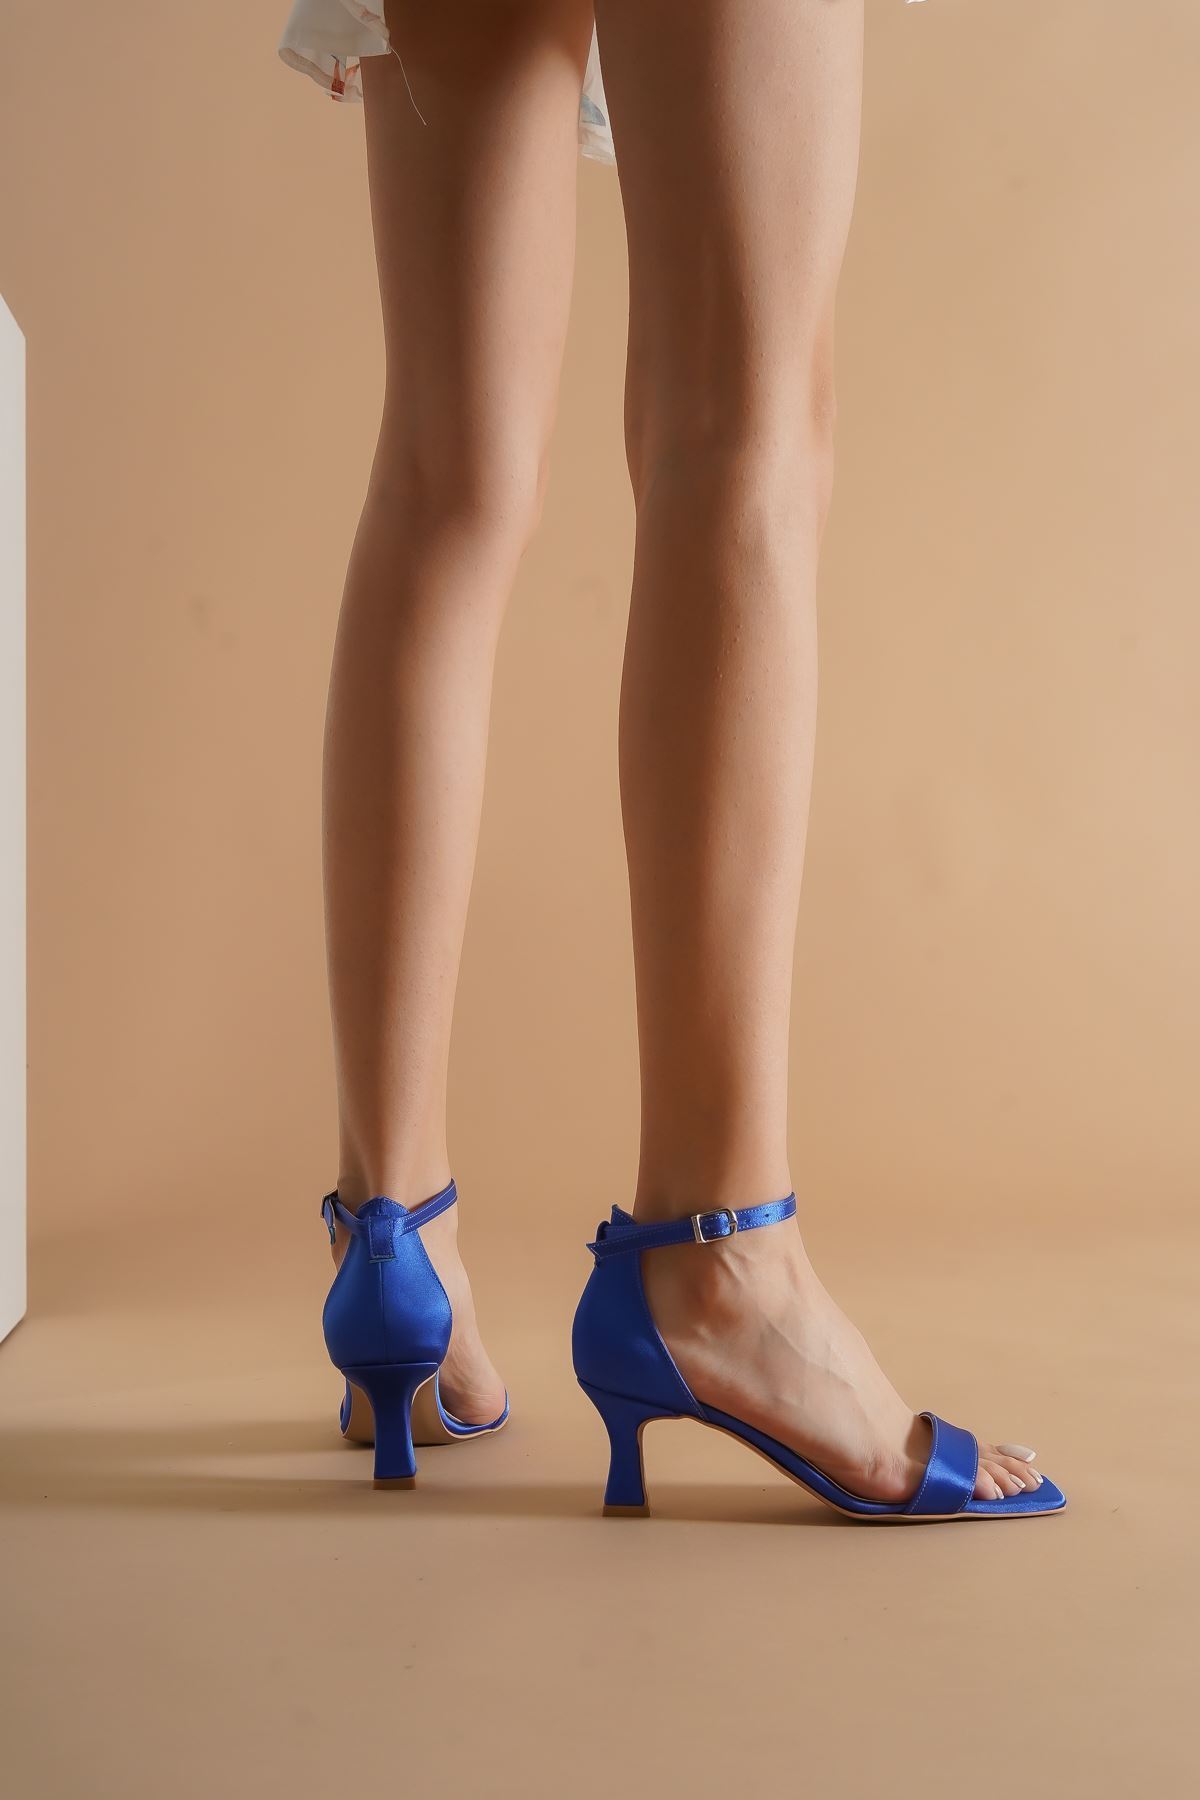 Quinn Sax Saten  Topuklu Kadın Ayakkabı